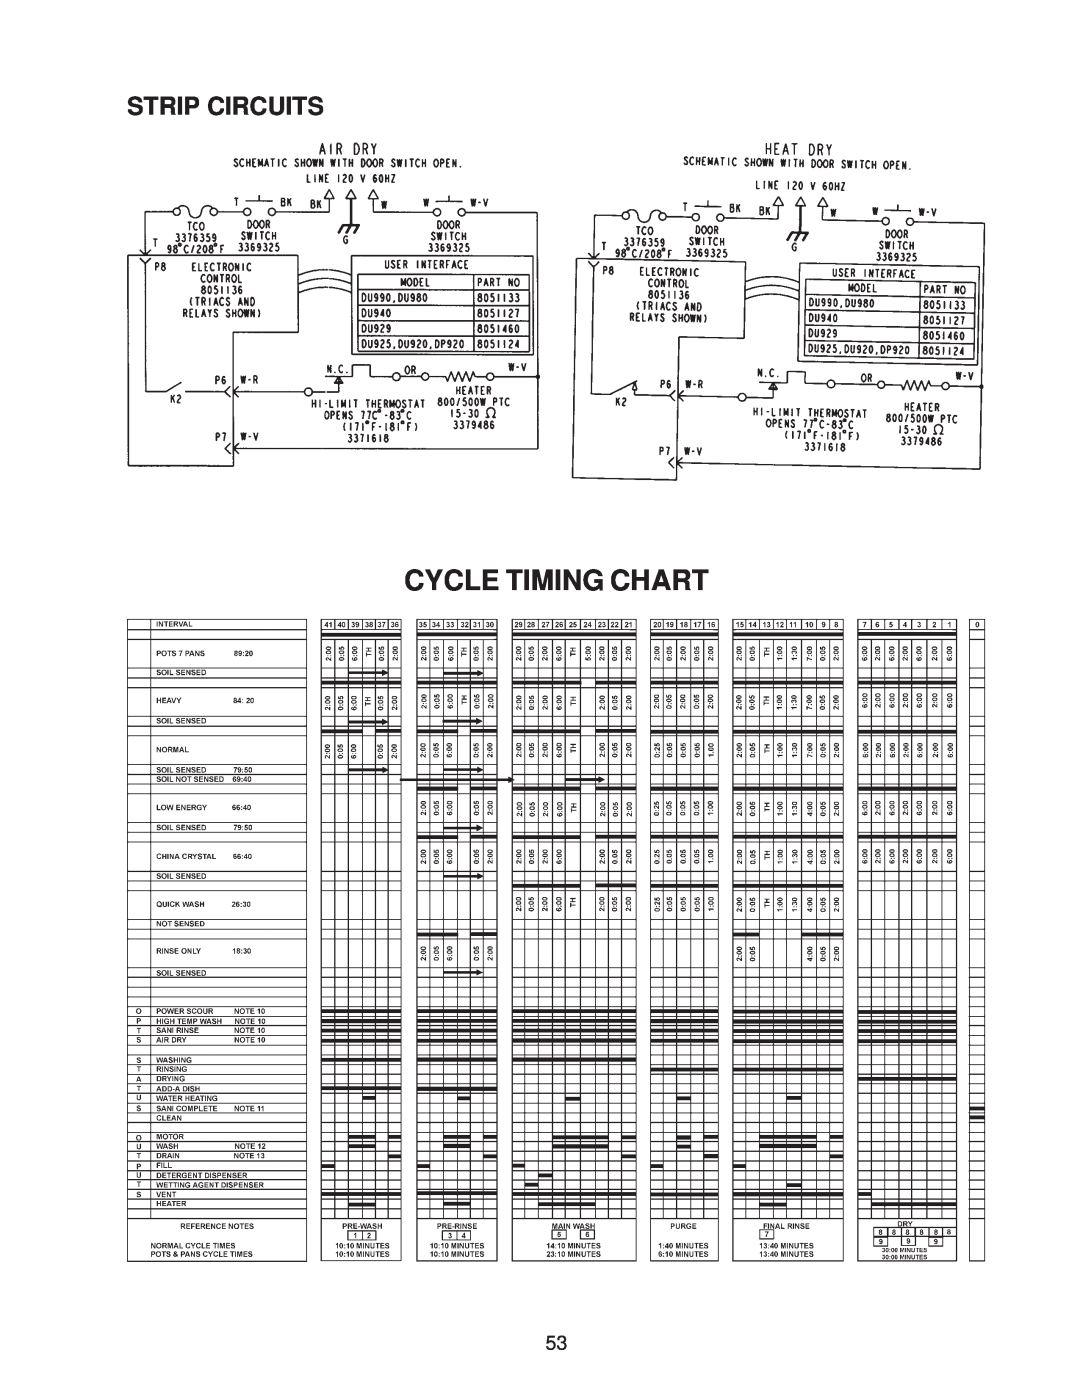 Kenmore DU920PFG, DU910PFG, DU890DWG, GU960SCG, DU850DWG, DP840DWG, DU805DWG, DU840DWG manual Cycle Timing Chart, Strip Circuits 